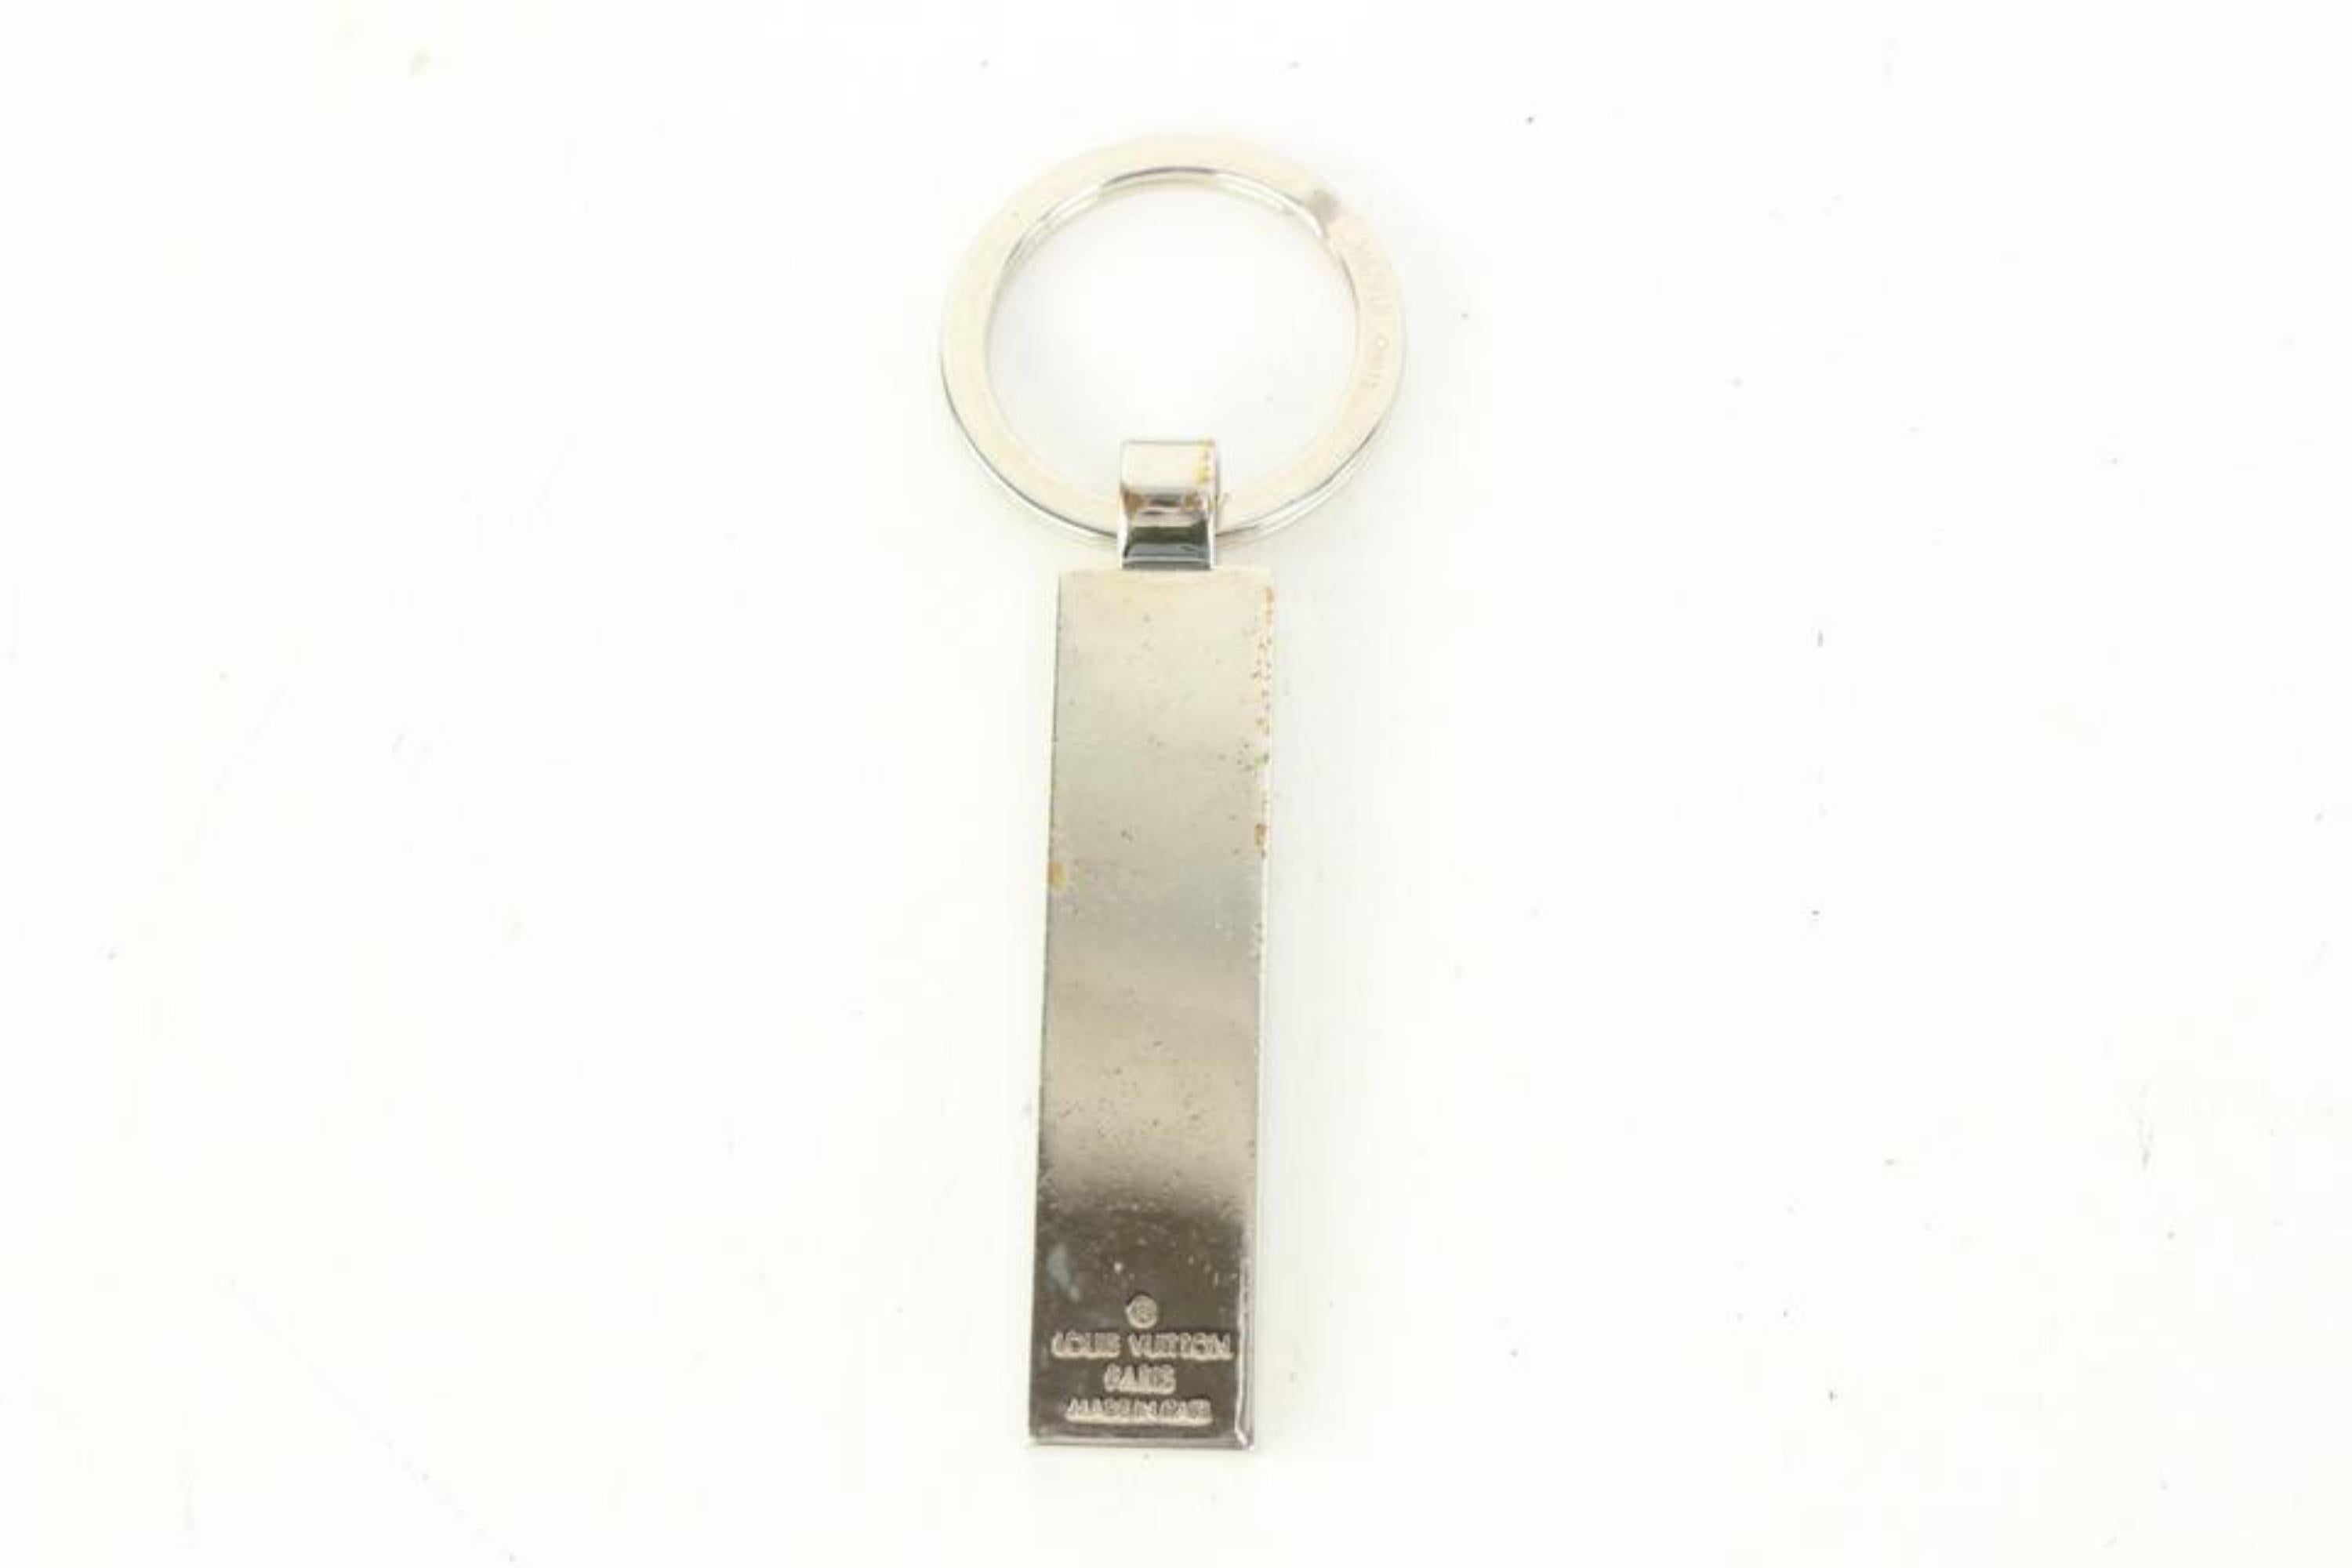 Louis Vuitton M67918 Silver Damier Keychain Keyring Key Charm Pendant 80lk52s For Sale 7